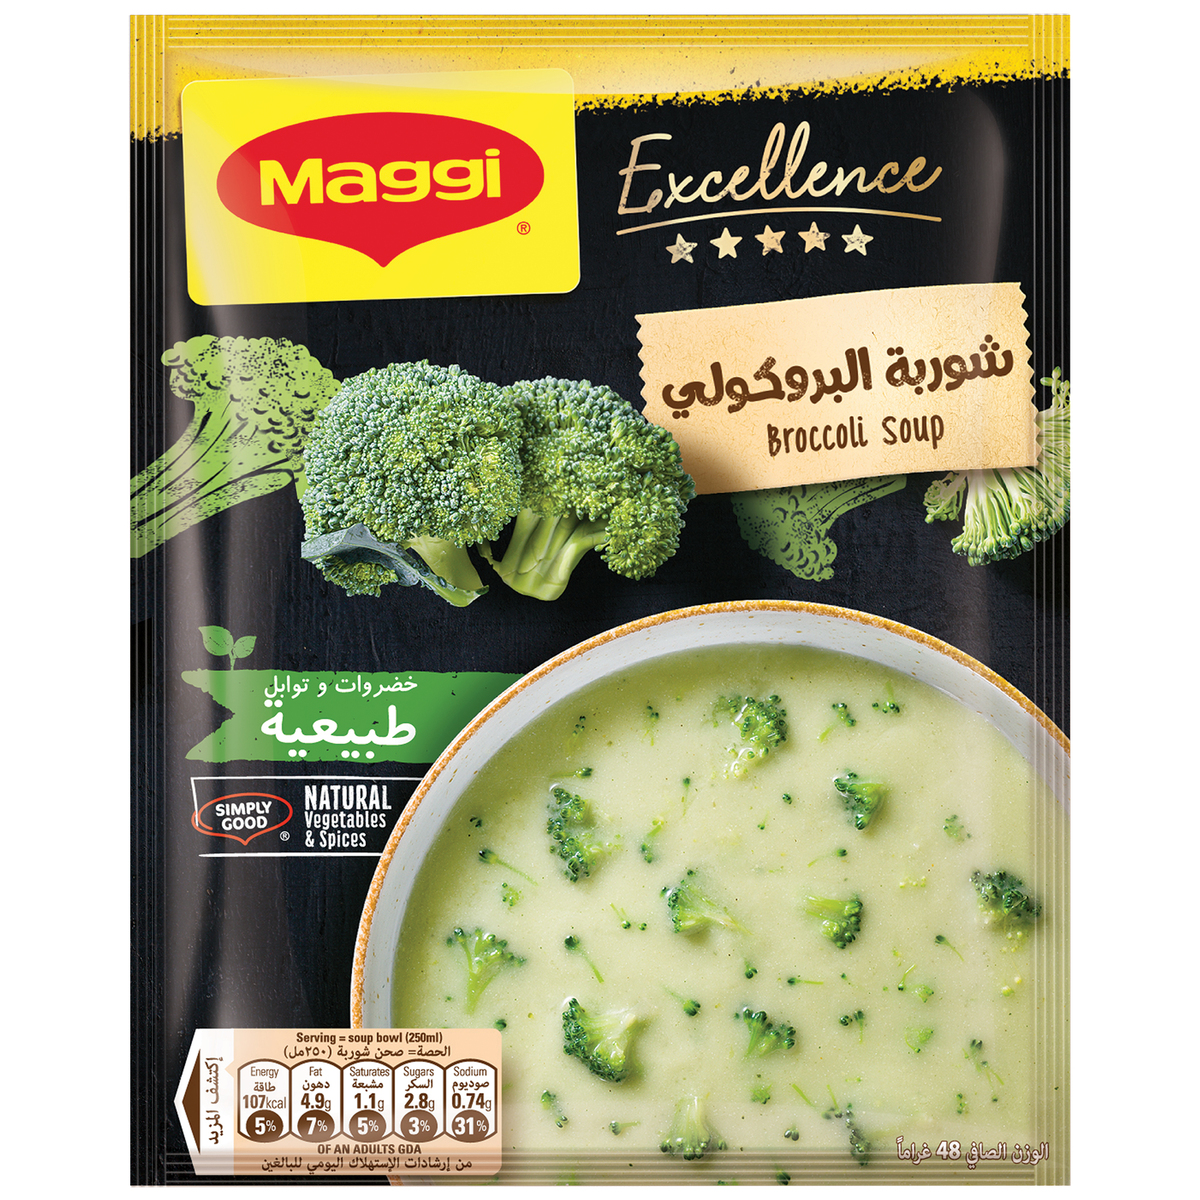 Maggi Excellence Broccoli Soup 10 x 48g